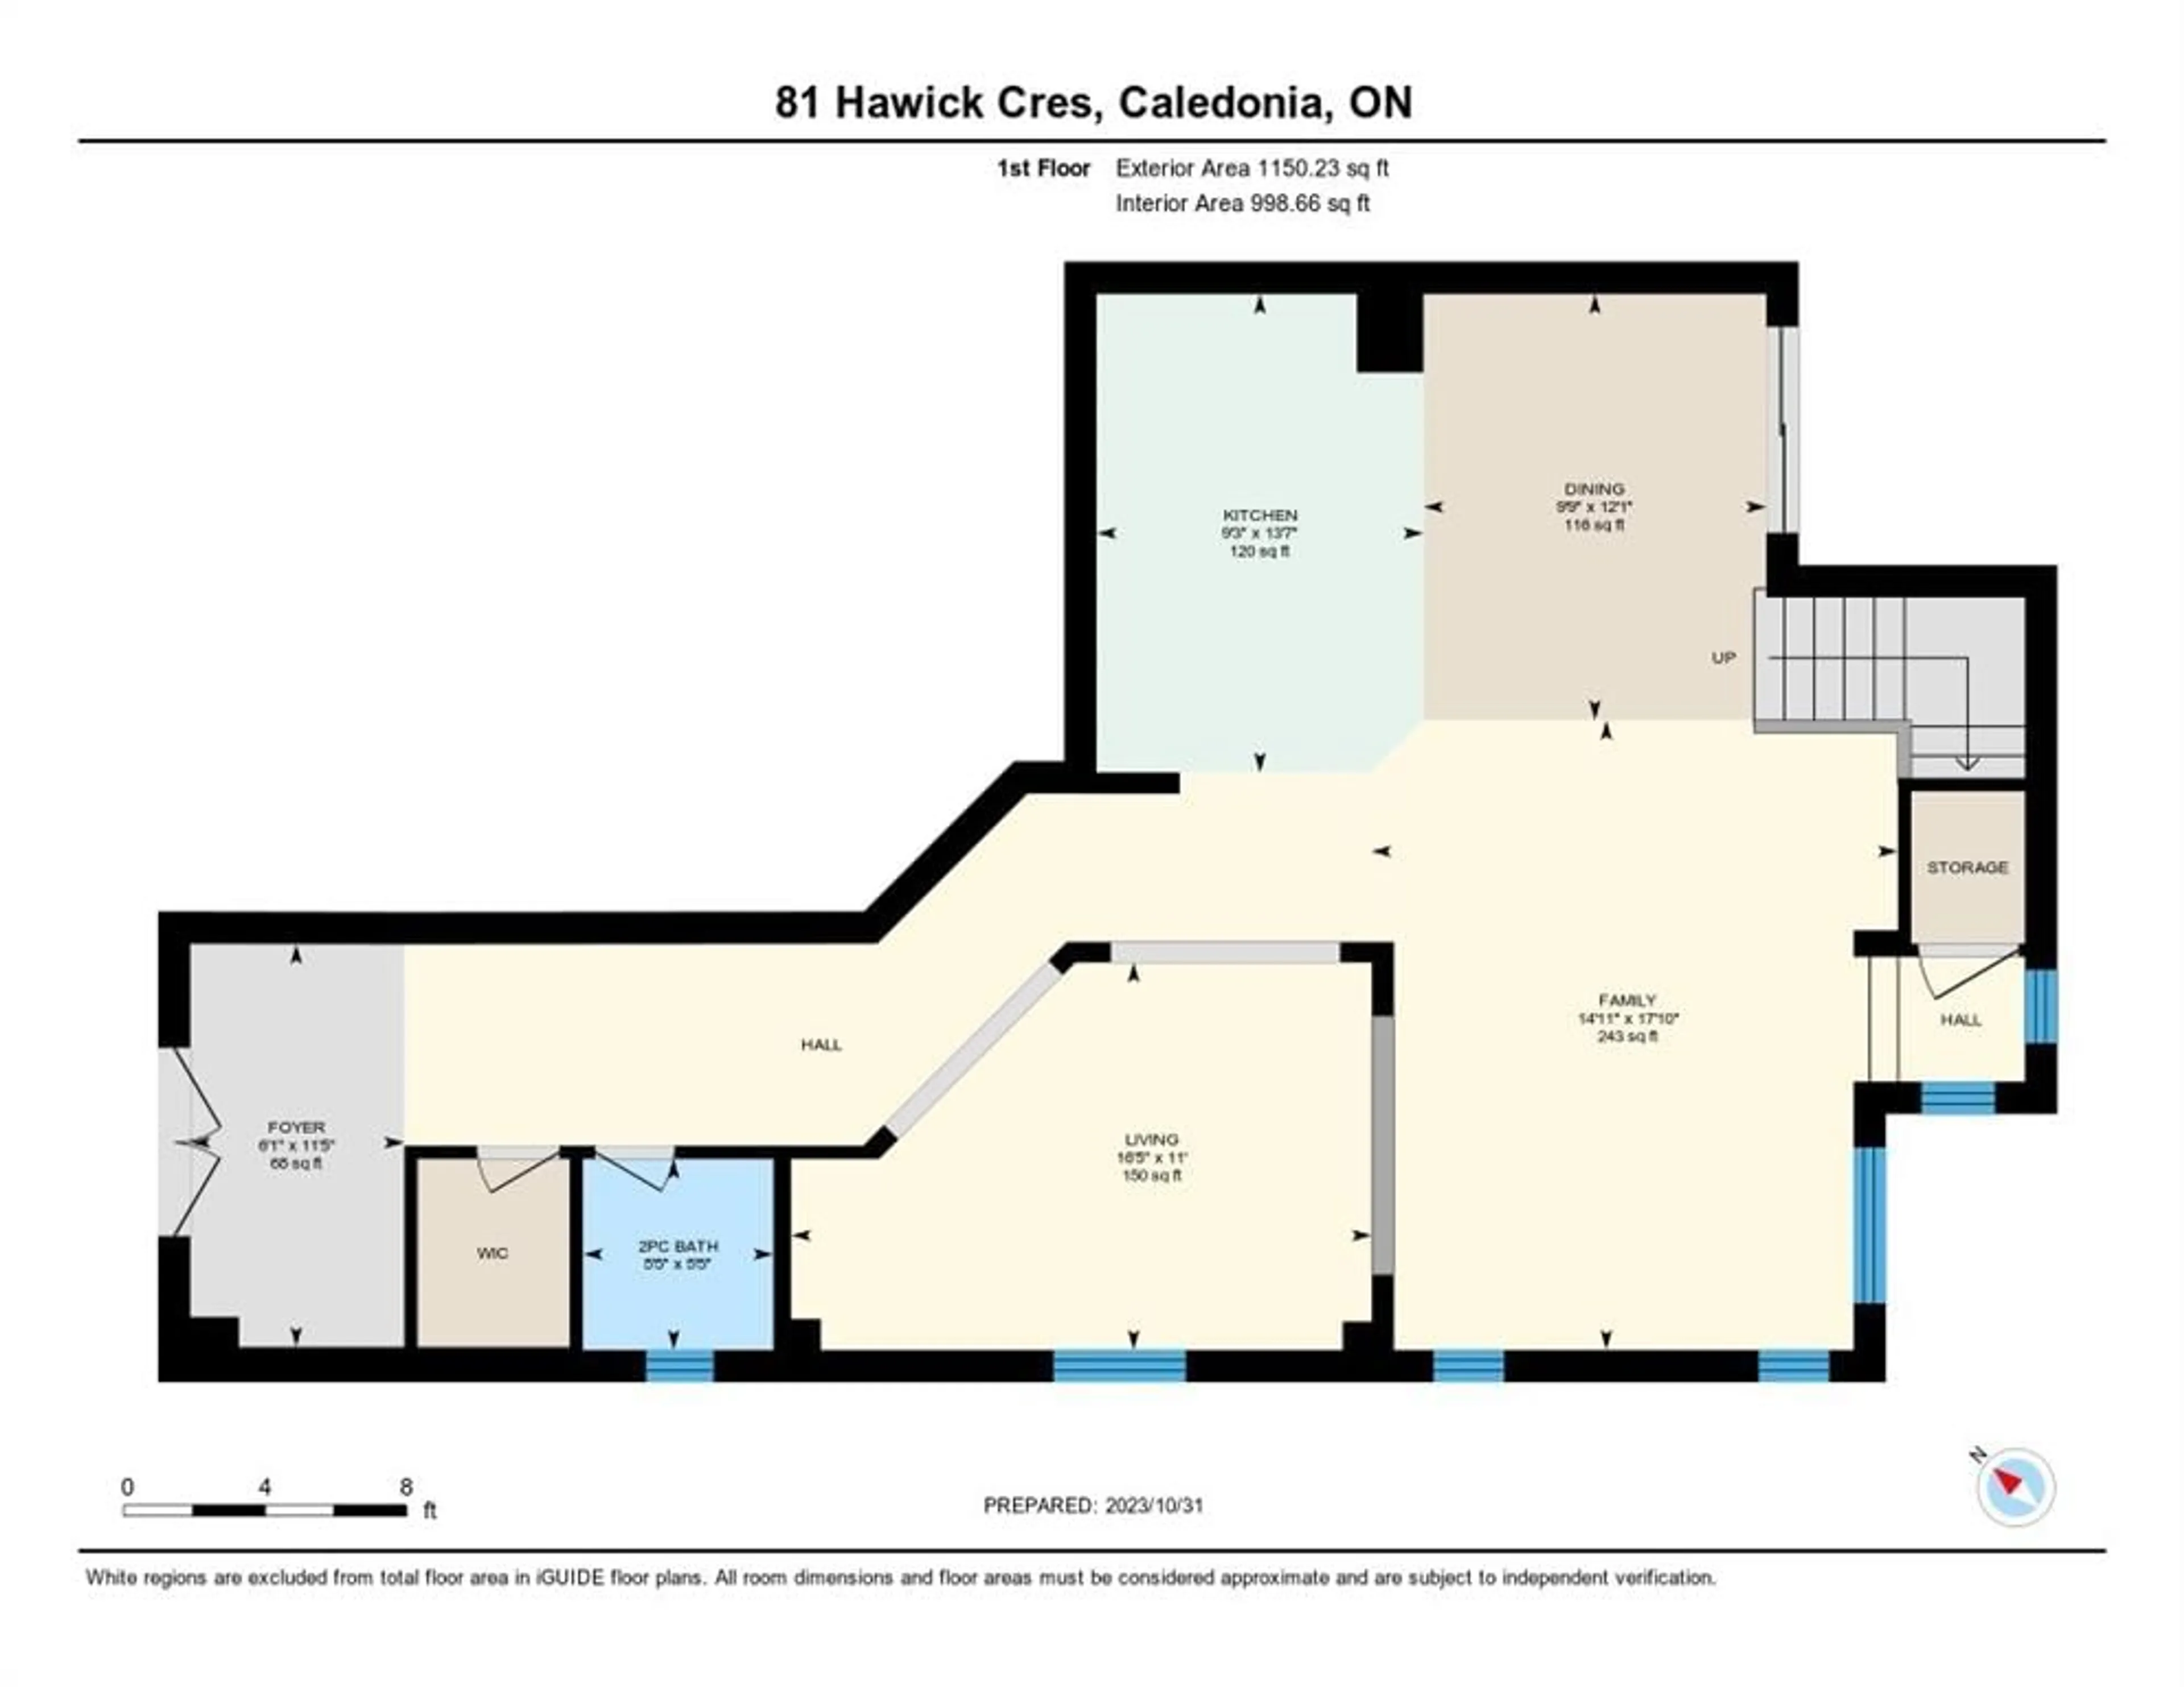 Floor plan for 81 Hawick Cres, Caledonia Ontario N3W 0G6